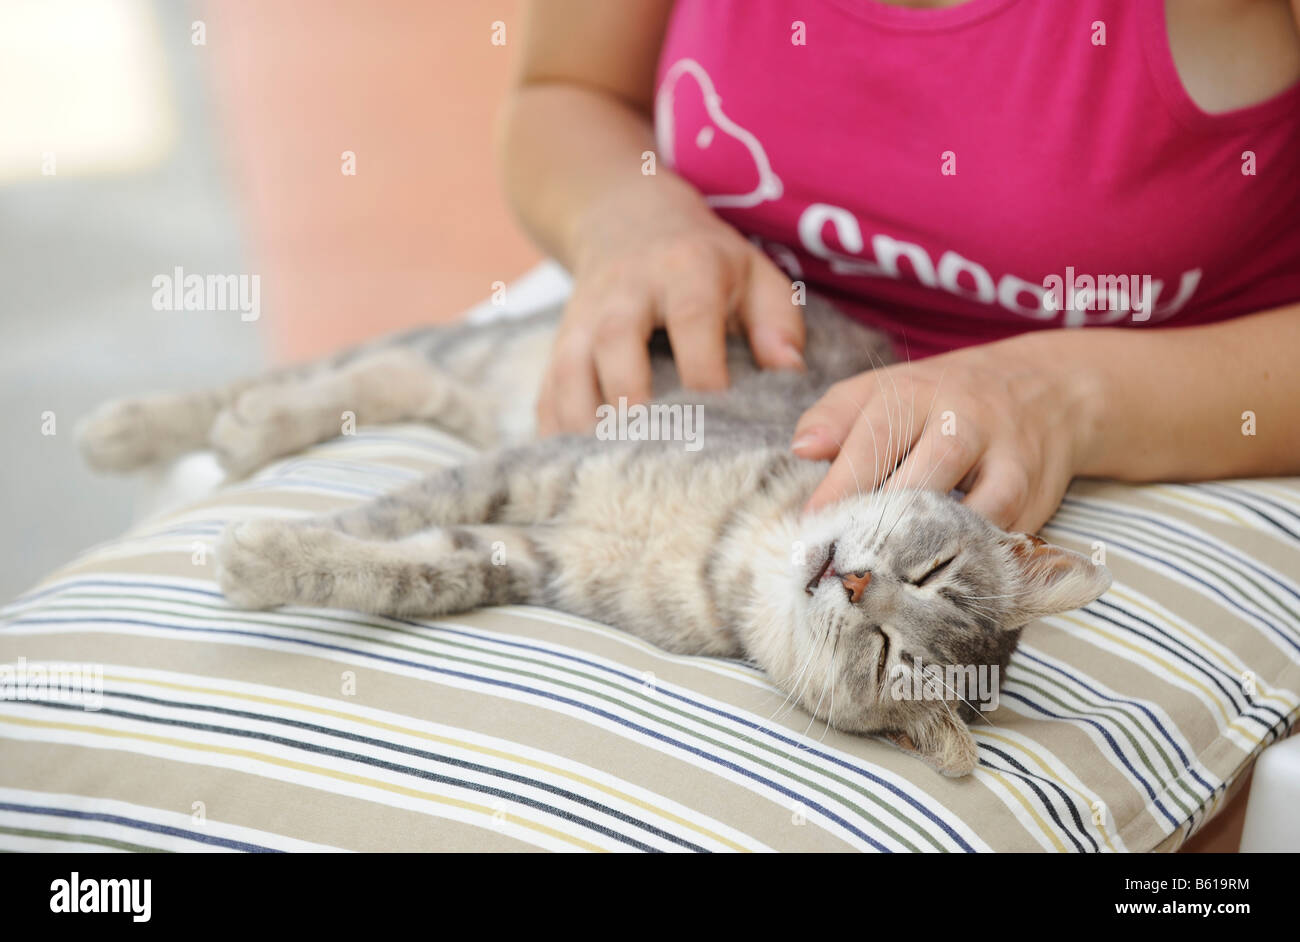 Girl stroking a cat, cat enjoying it Stock Photo